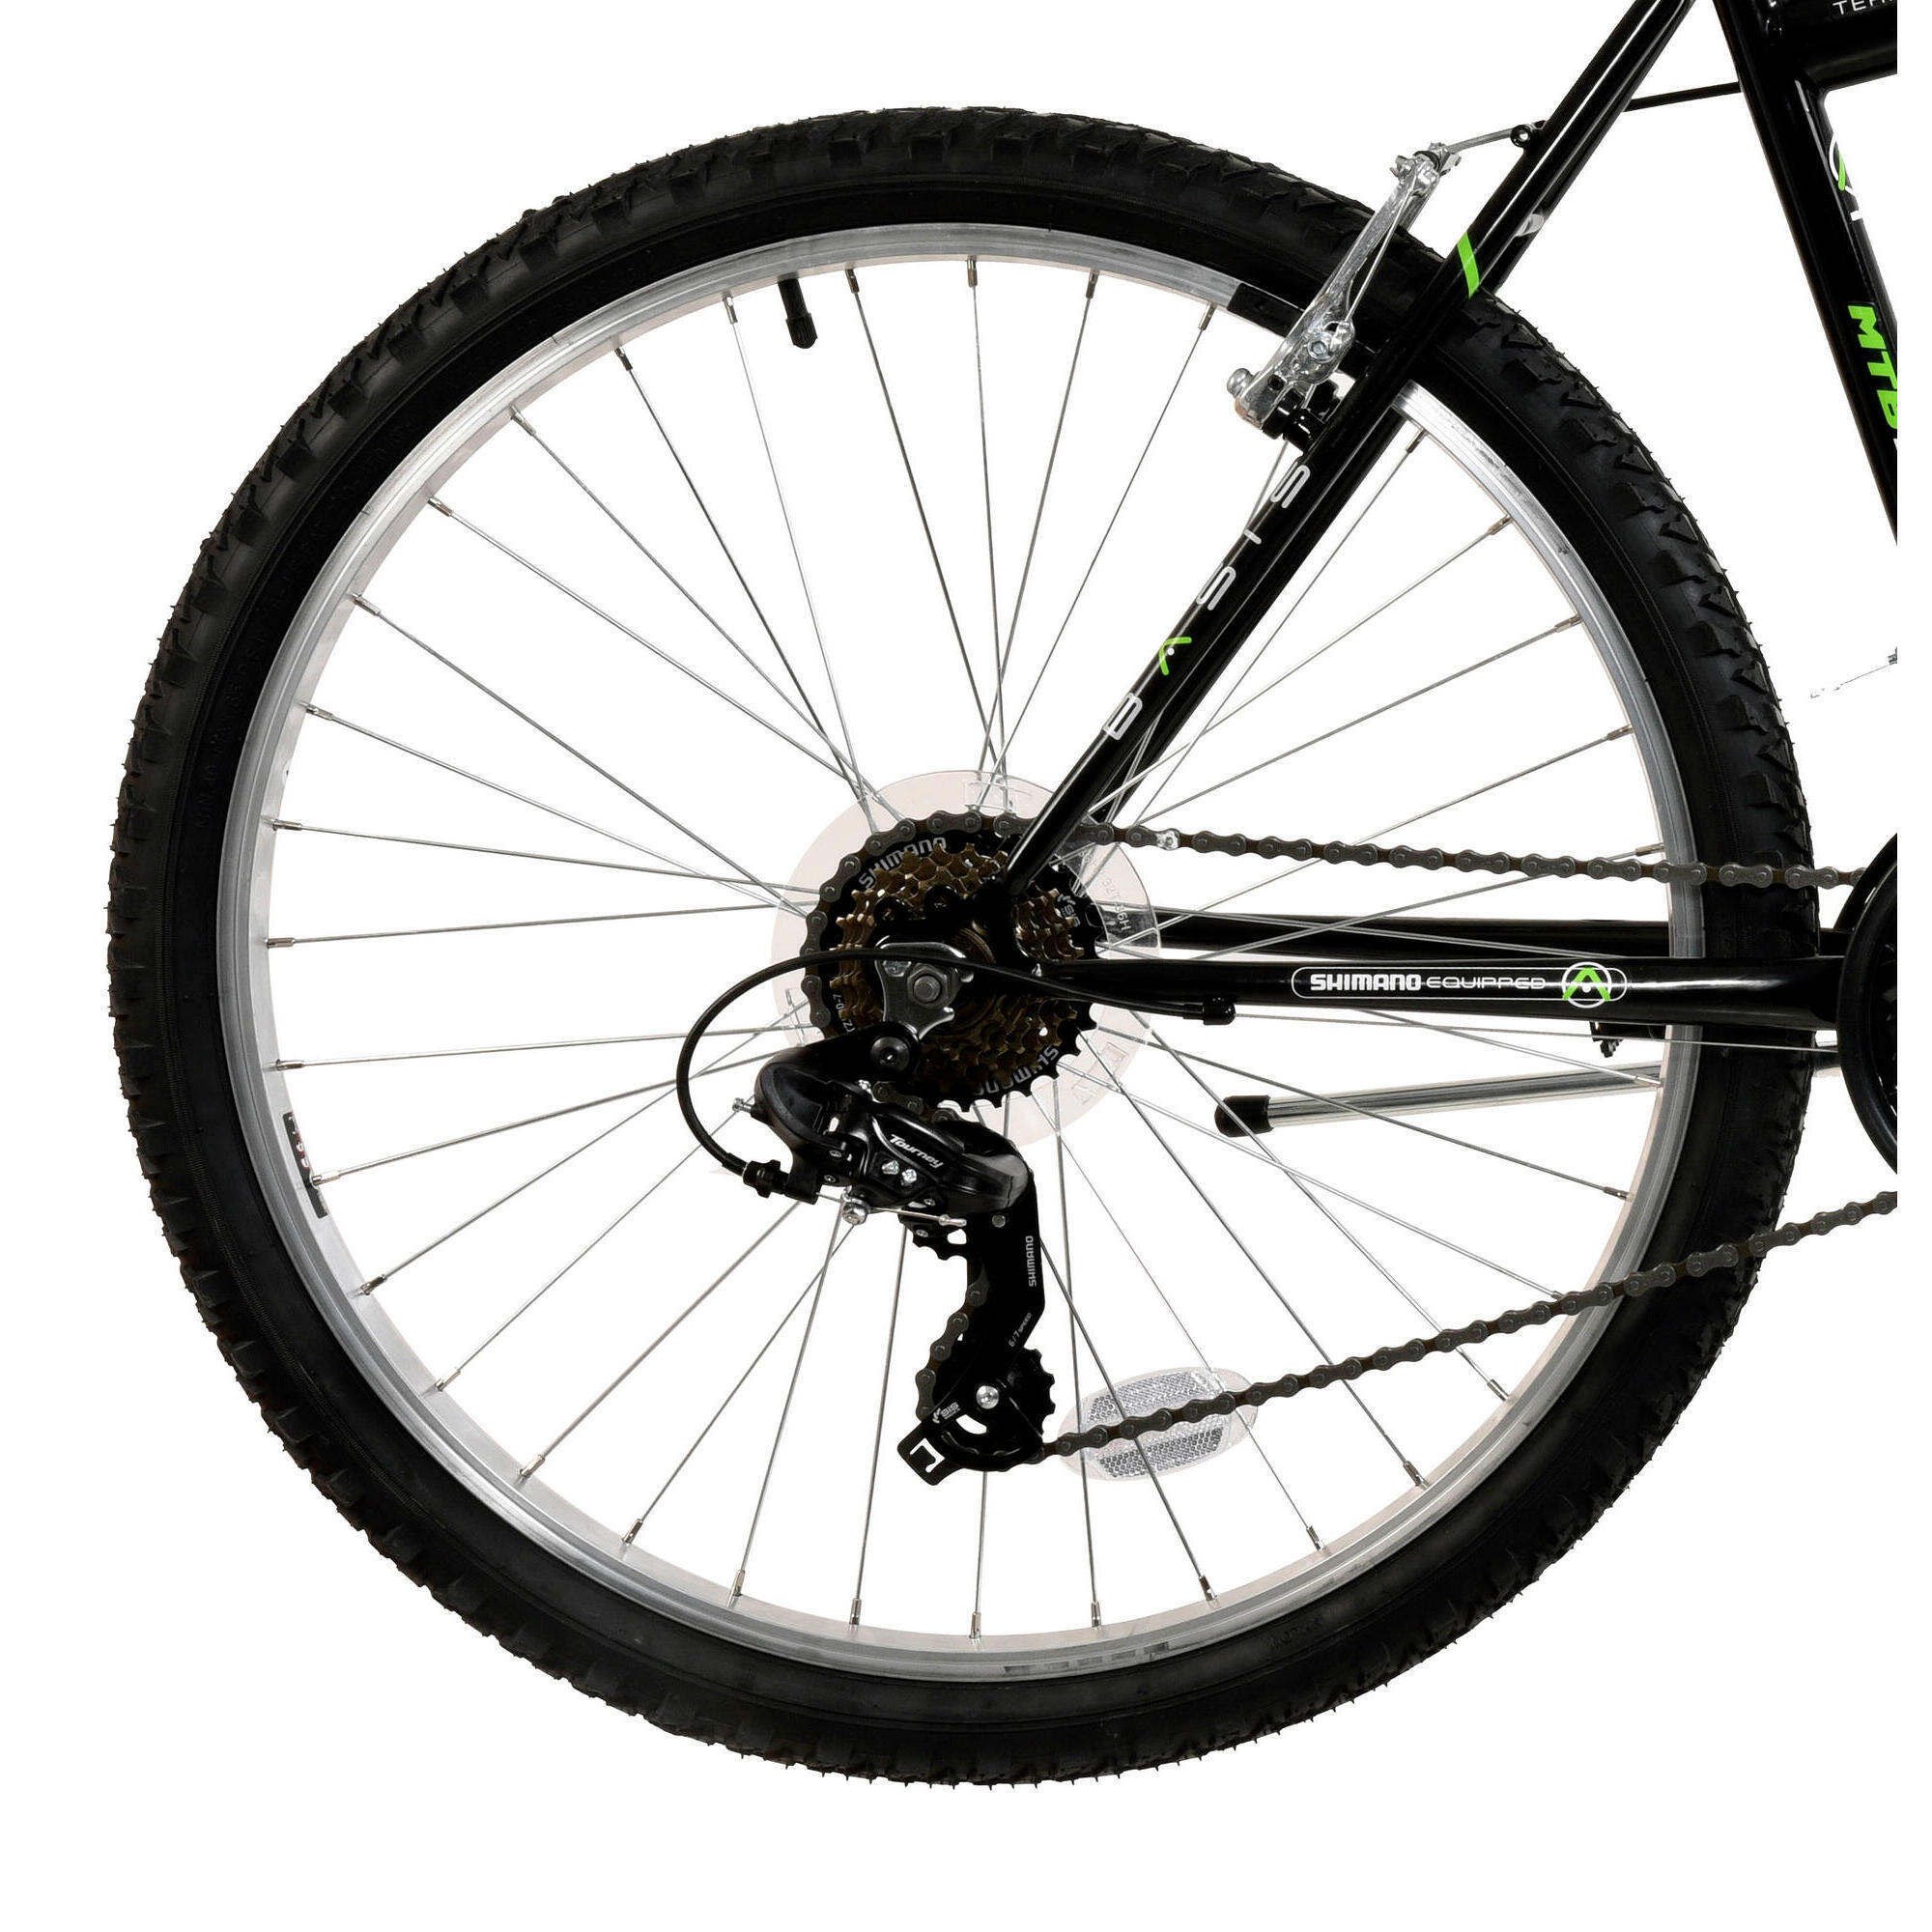 Basis MRX Pro Adult's Hardtail Mountain Bike, 26In Wheel - Black/Green 4/5